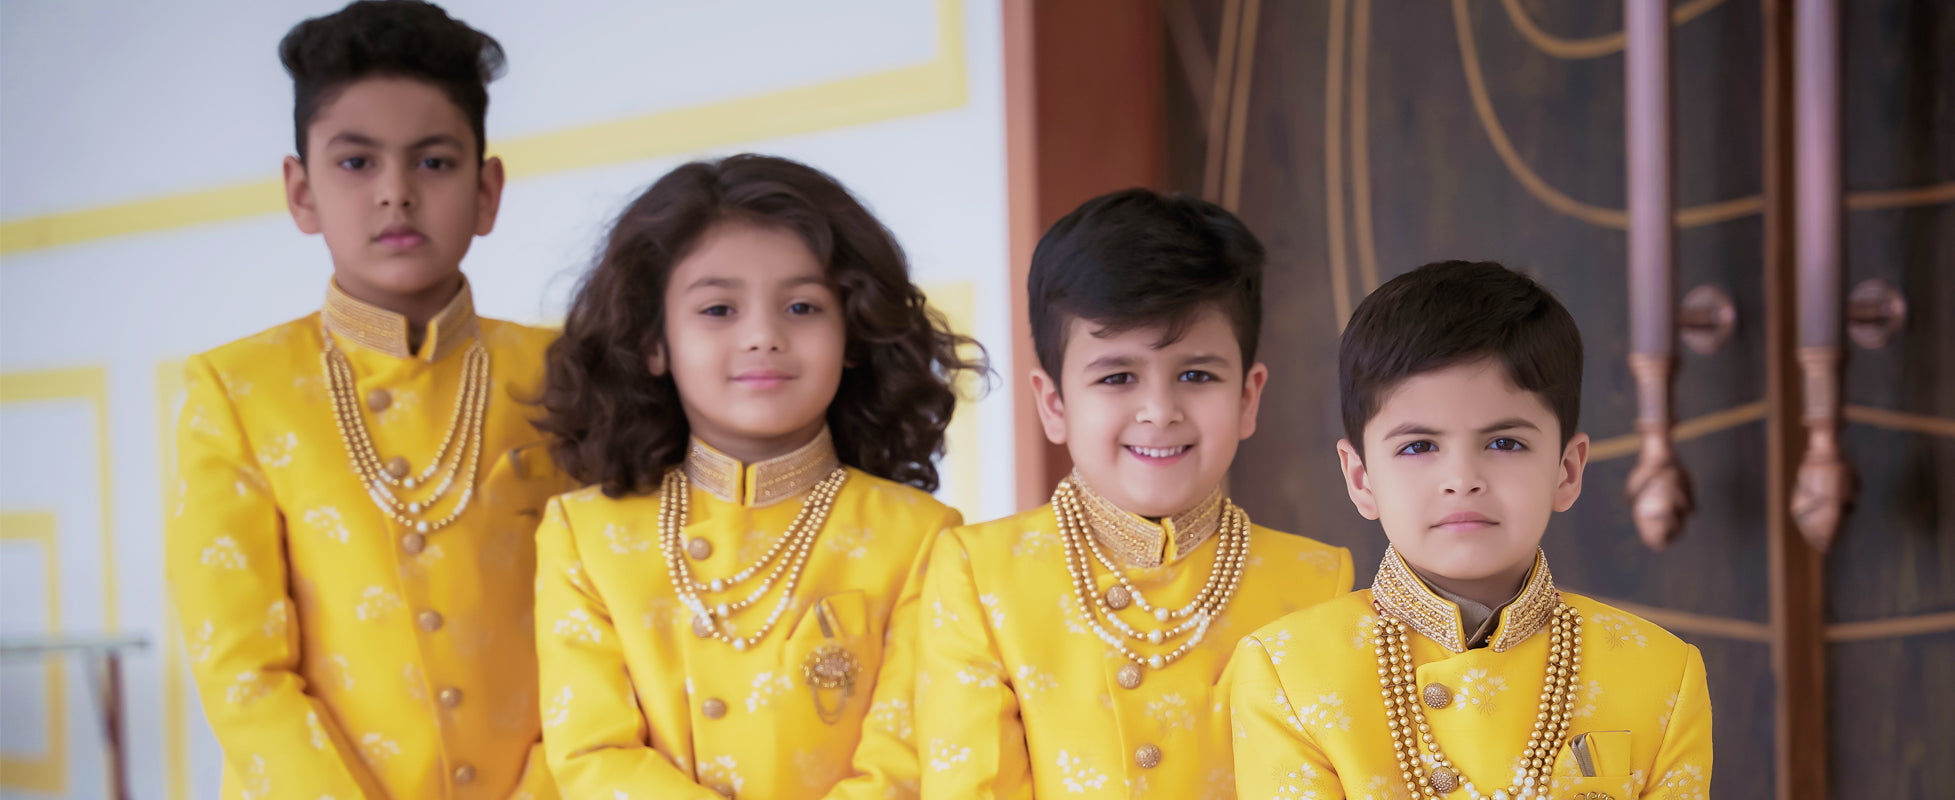 Boys Jodhpuri Suits for Royal Wedding